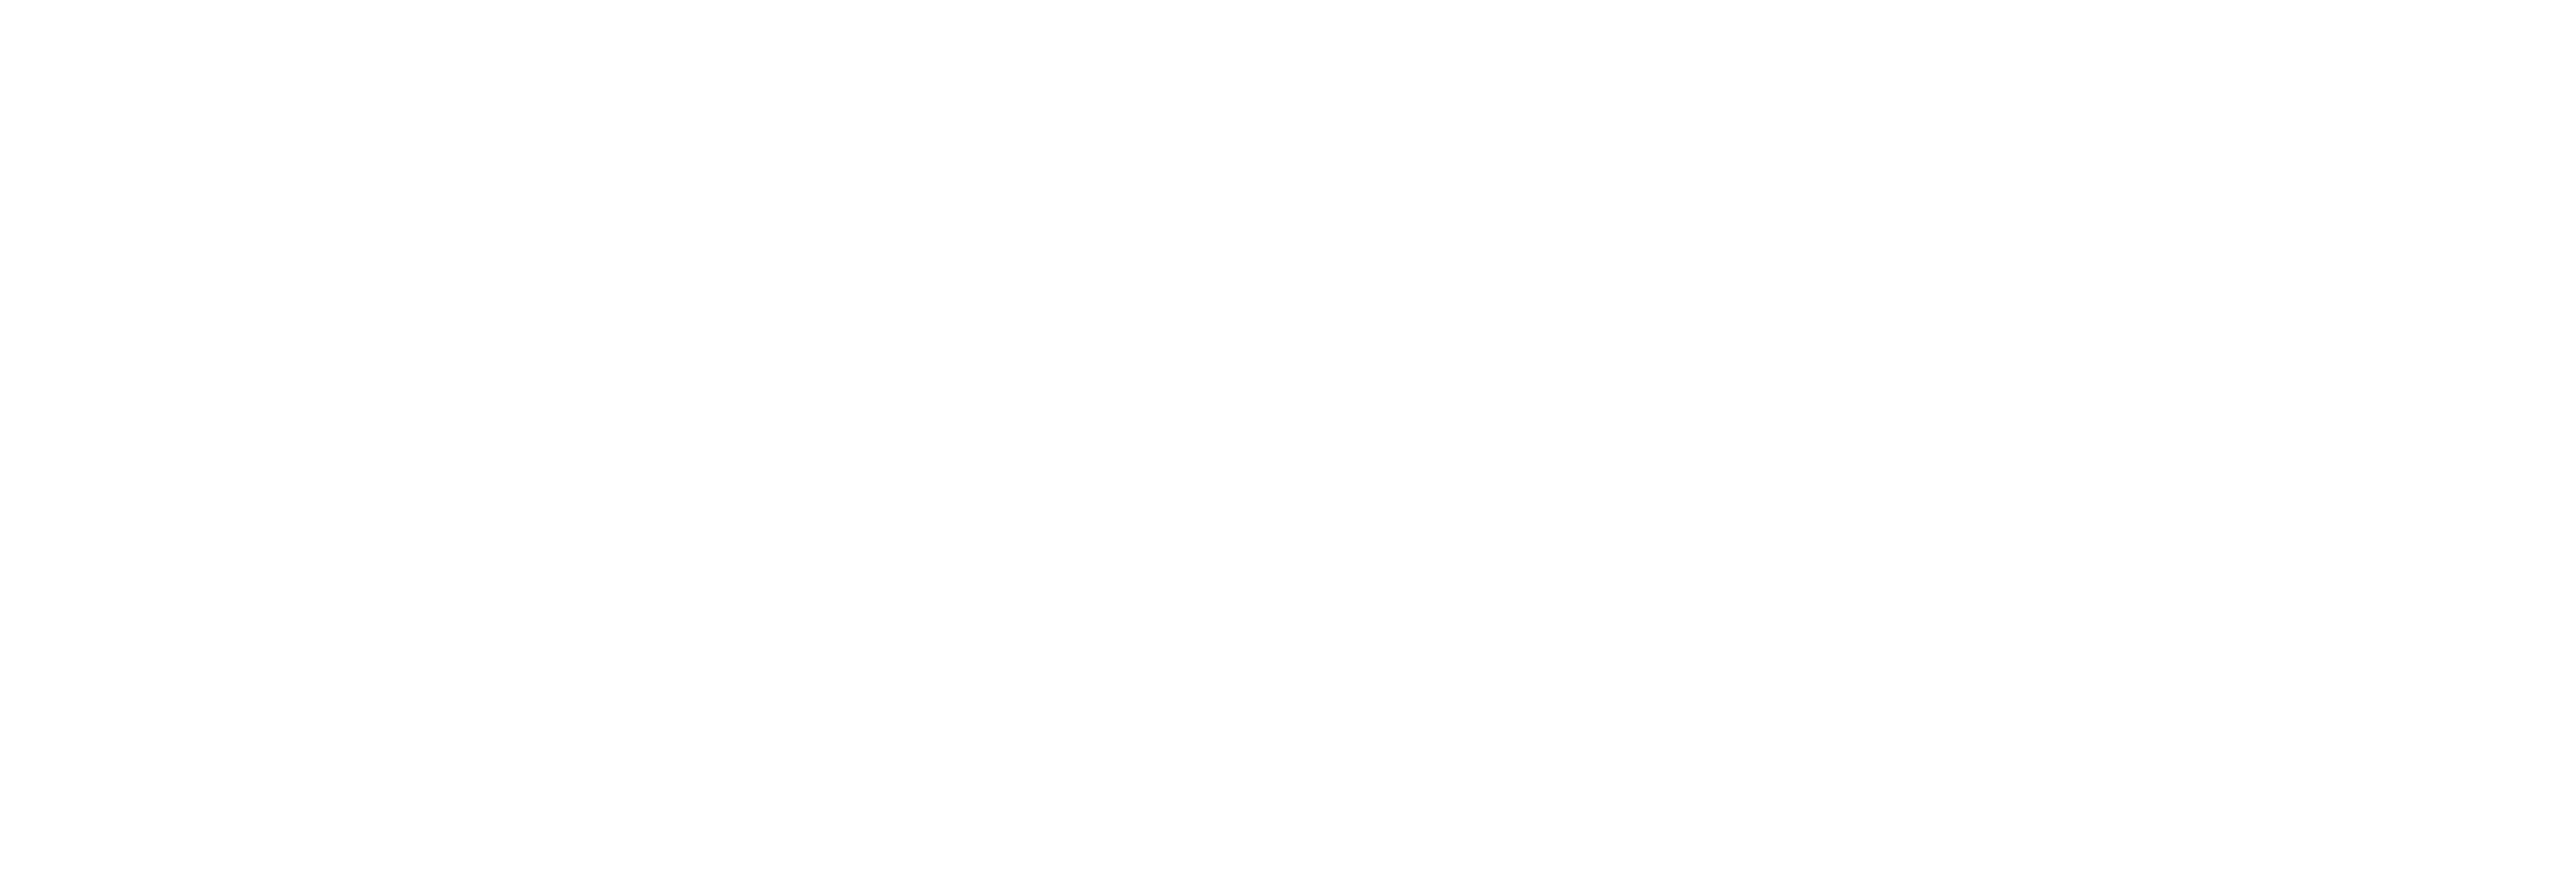 AniCura Dierenziekenhuis Tilburg logo